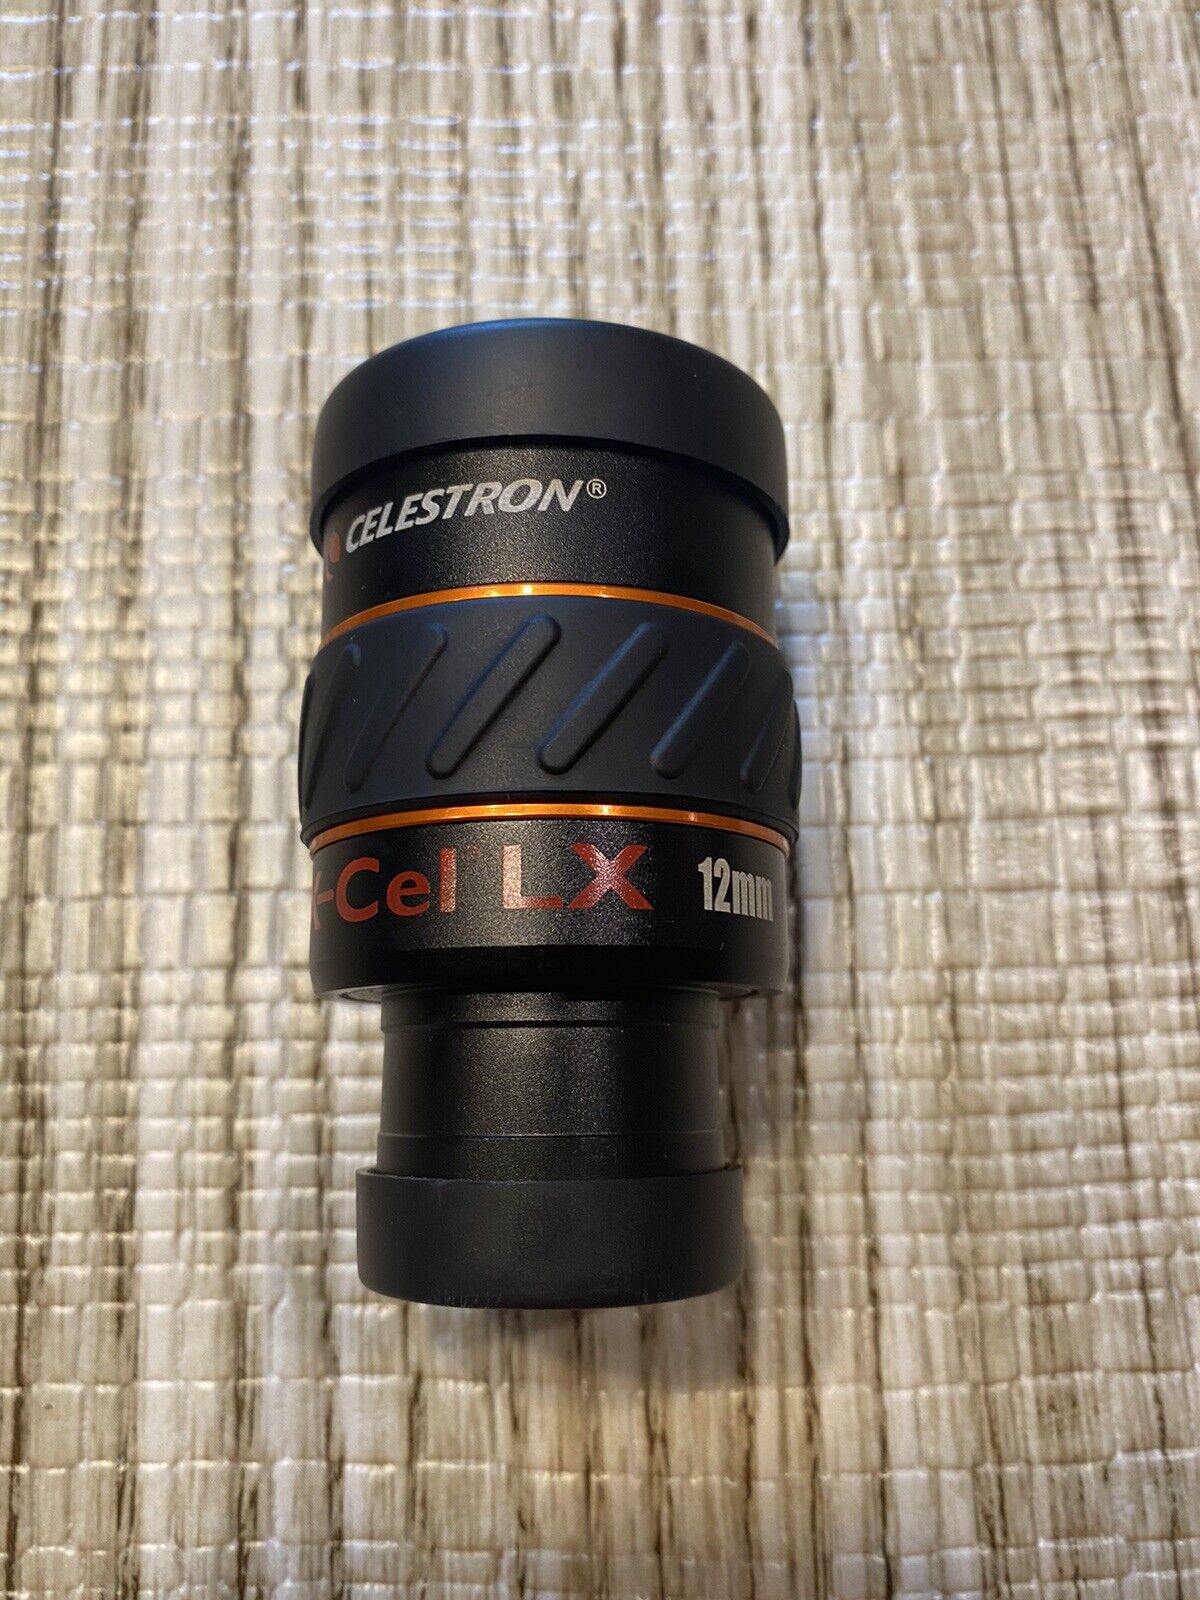 Celestron X-Cel 12mm Eyepiece